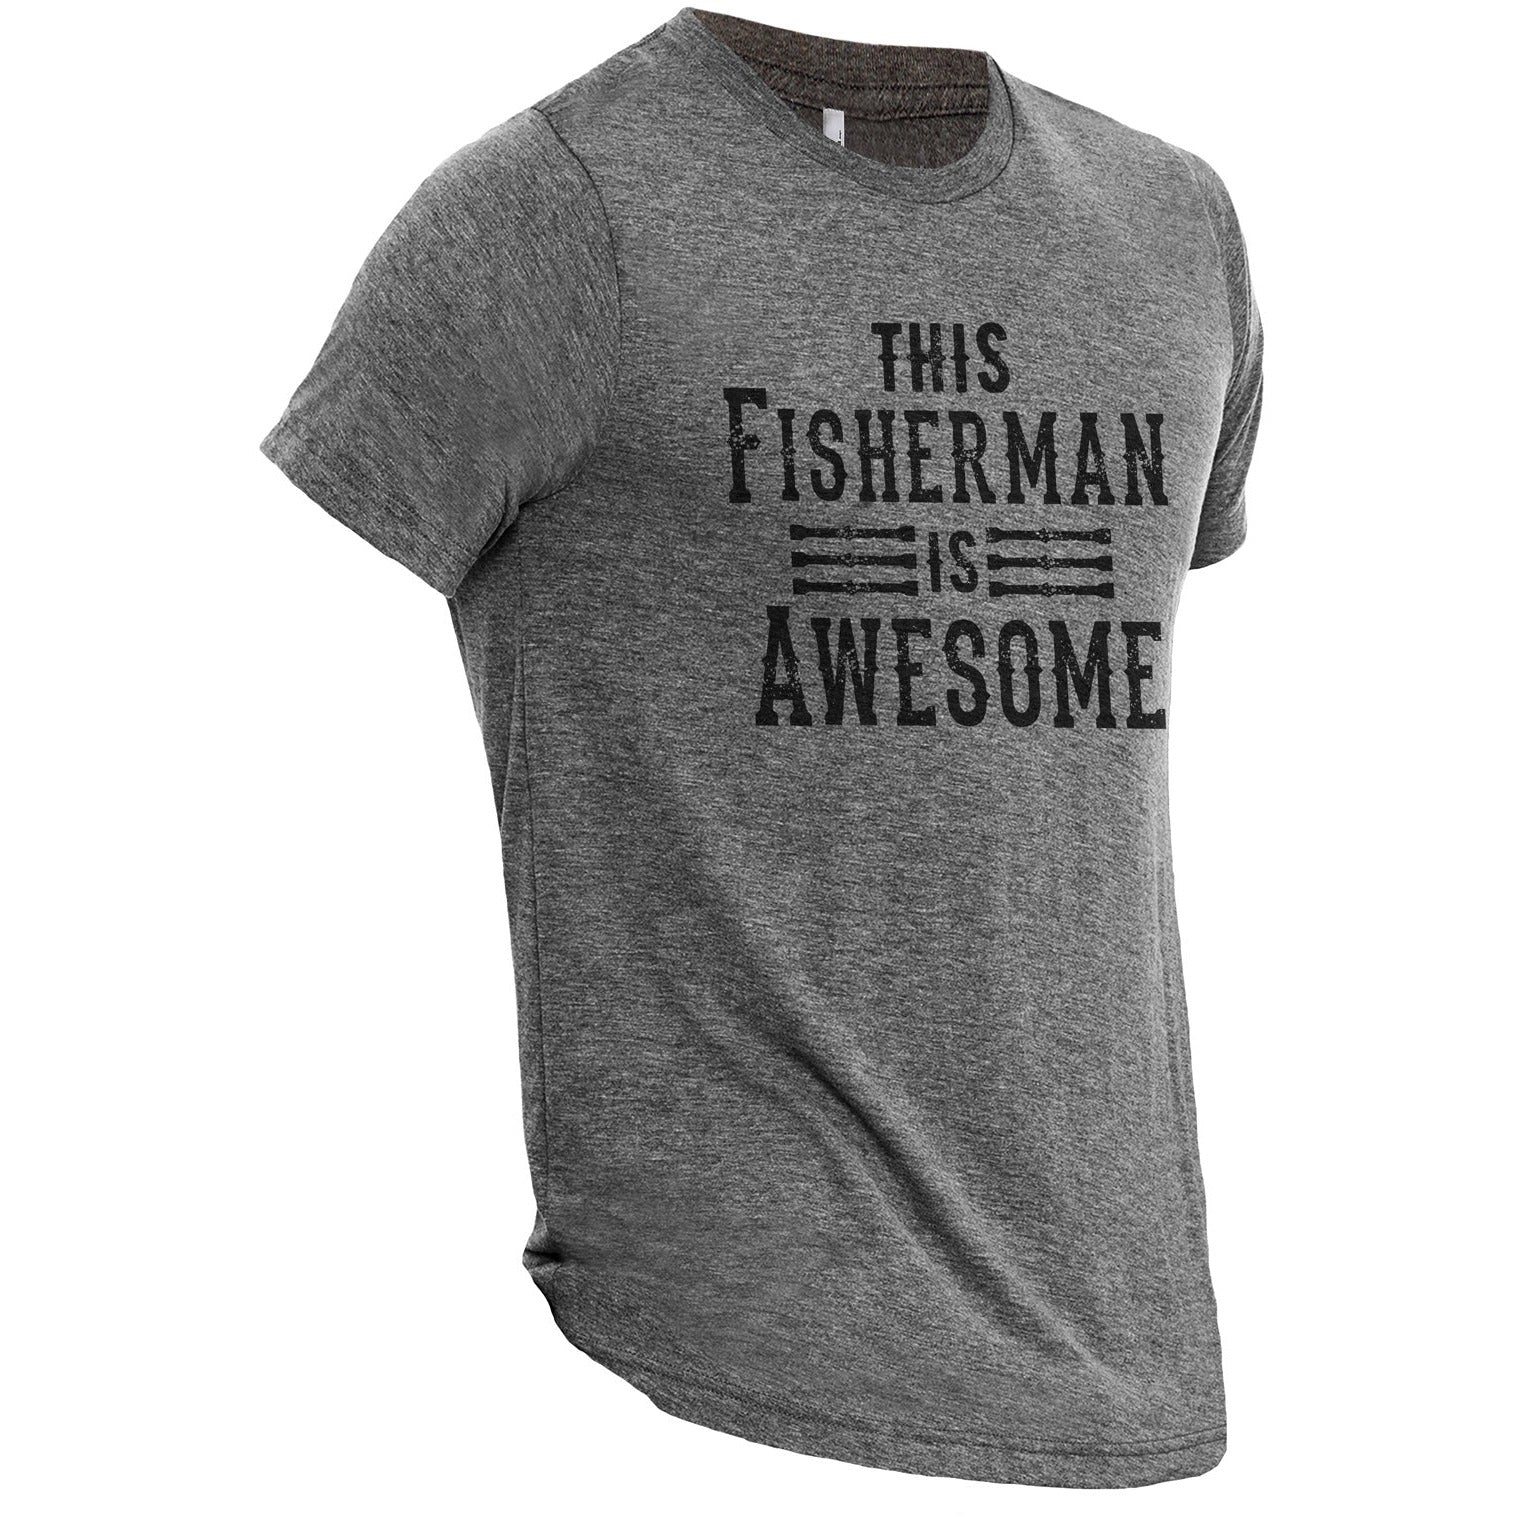 Gone Fishing Printed Graphic Men's Crew T-shirt Tee